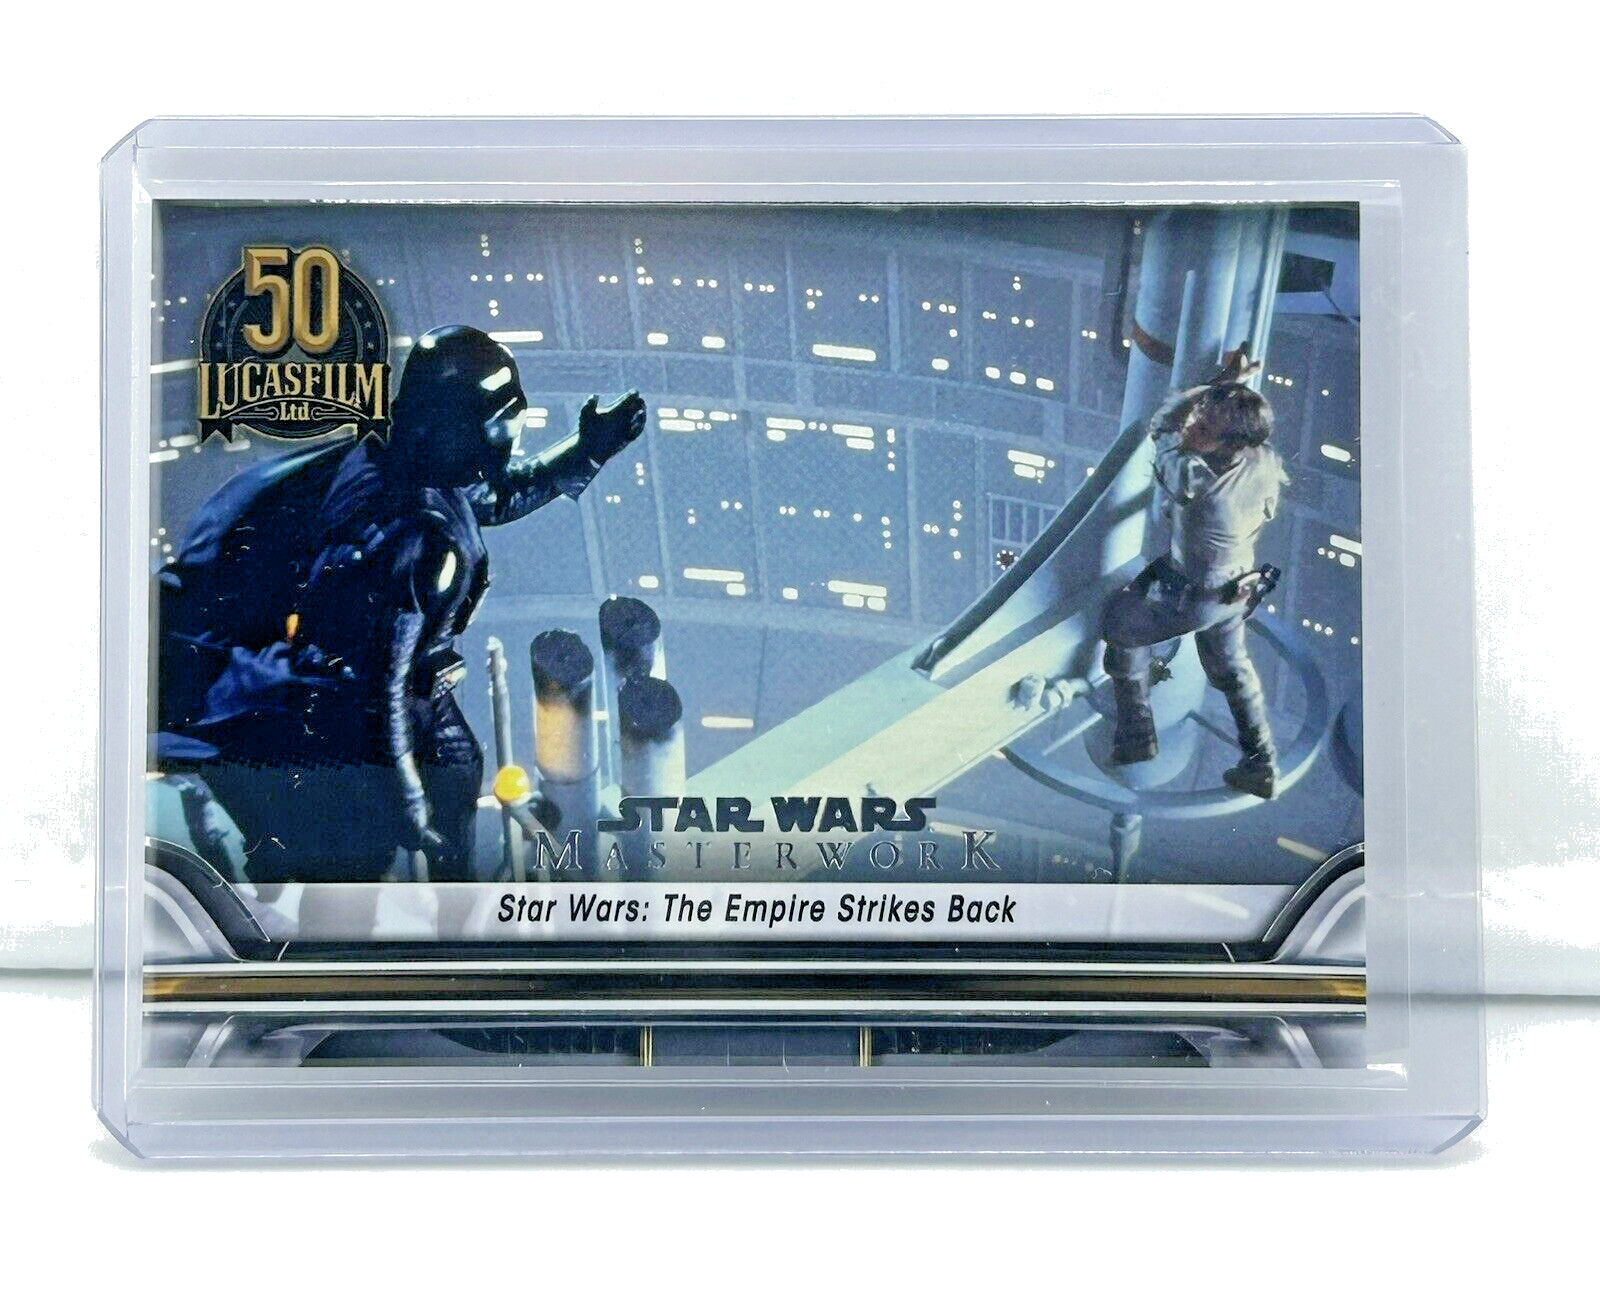 2021 Topps Star Wars Masterwork Lucasfilm 50th #LFA-3 Rainbow Foil /299